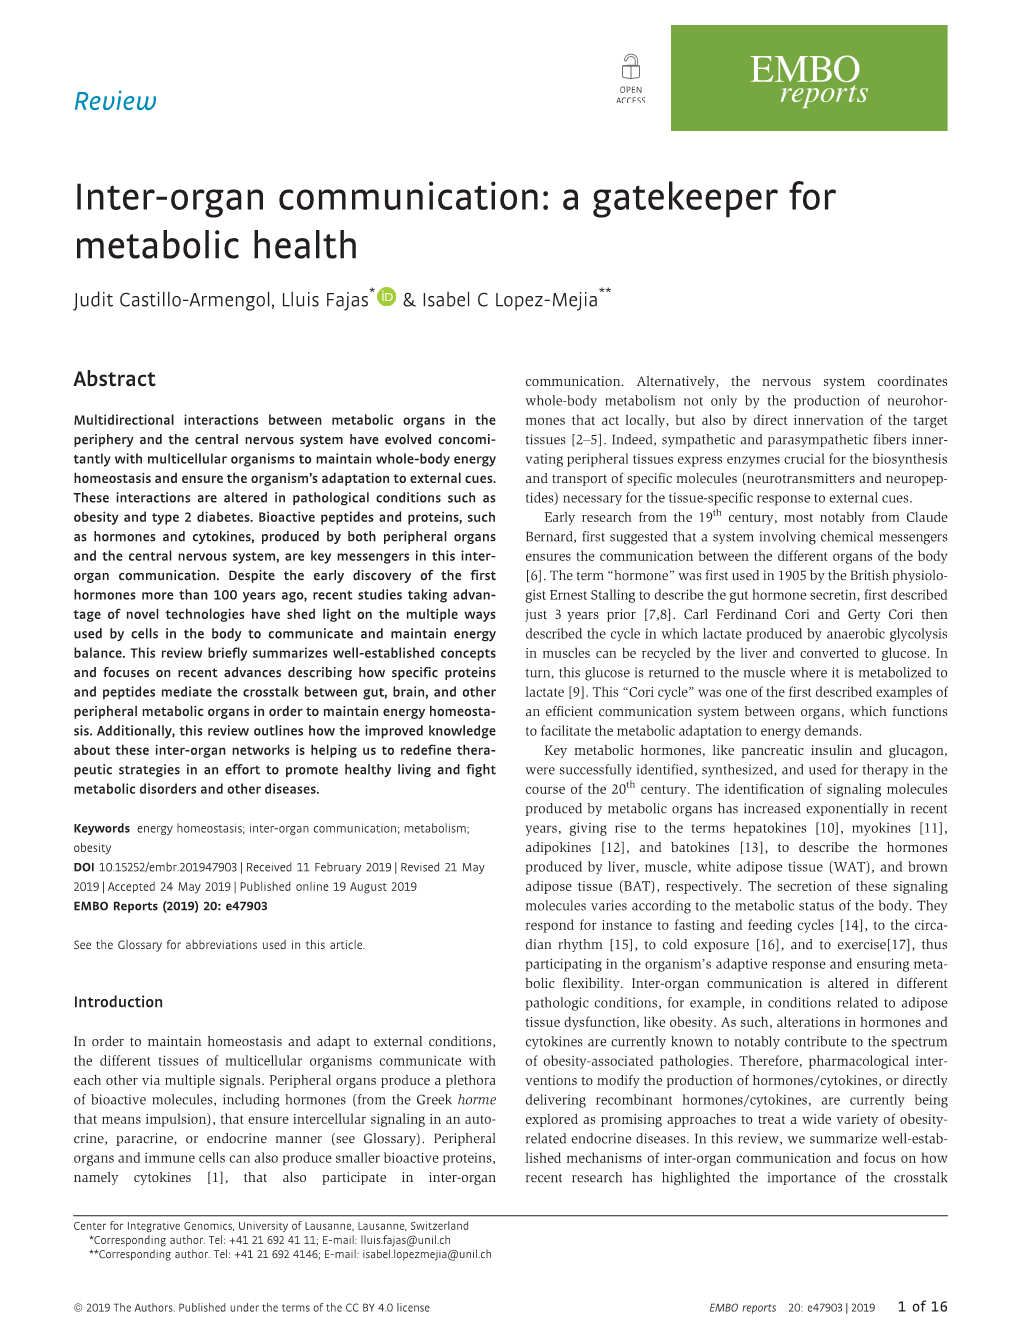 Organ Communication: a Gatekeeper for Metabolic Health